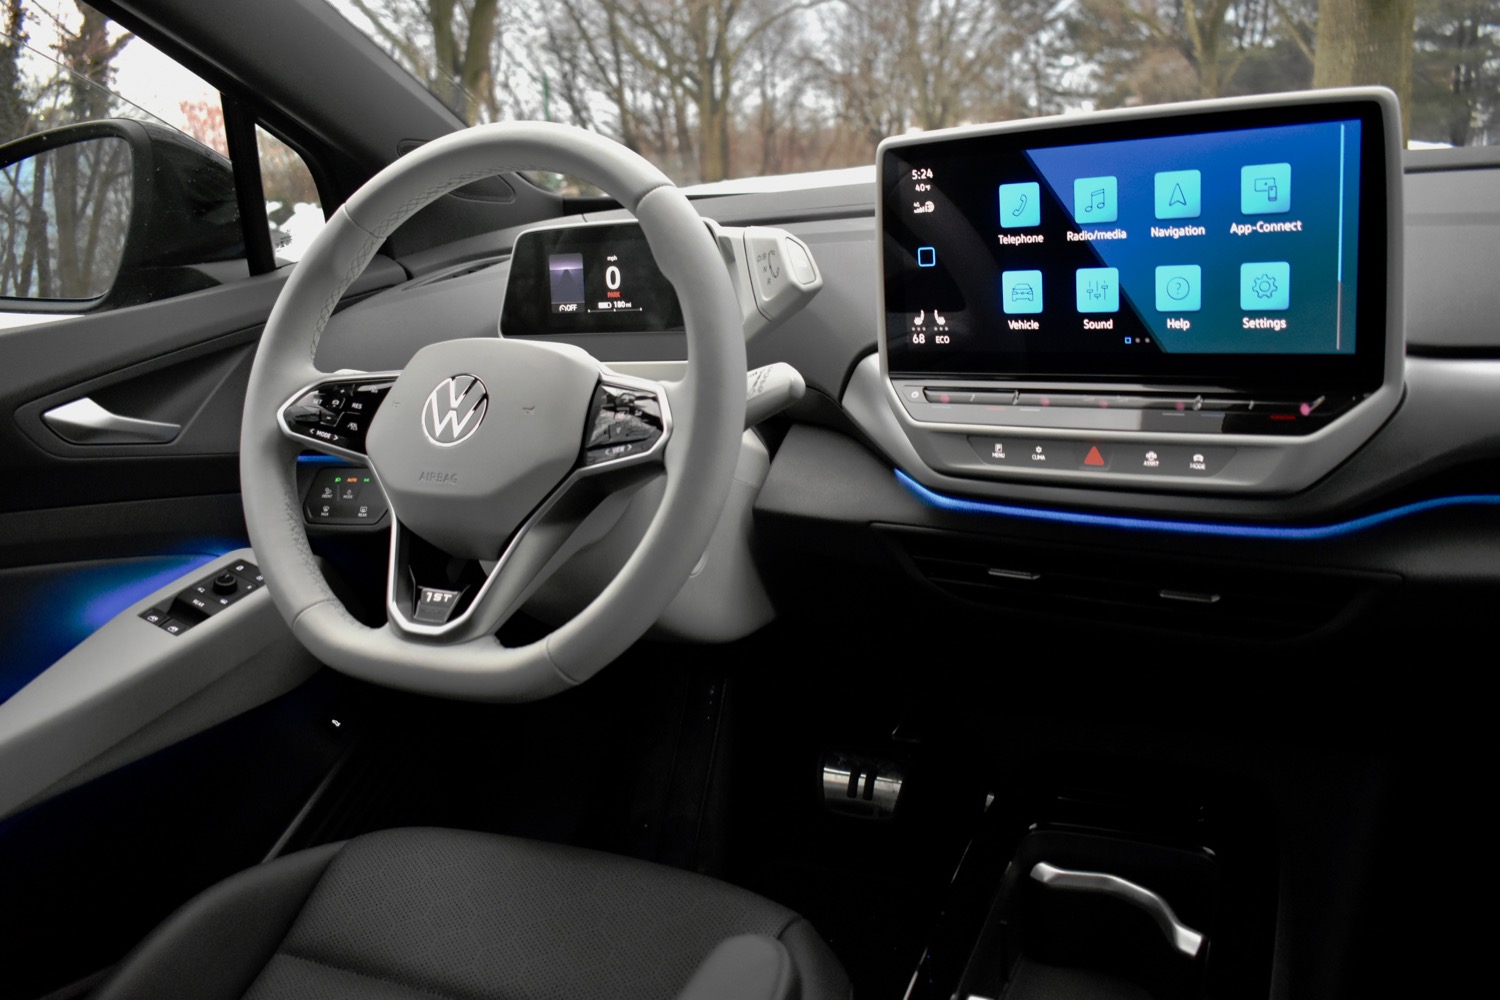 Volkswagen ID.4 interior revealed 